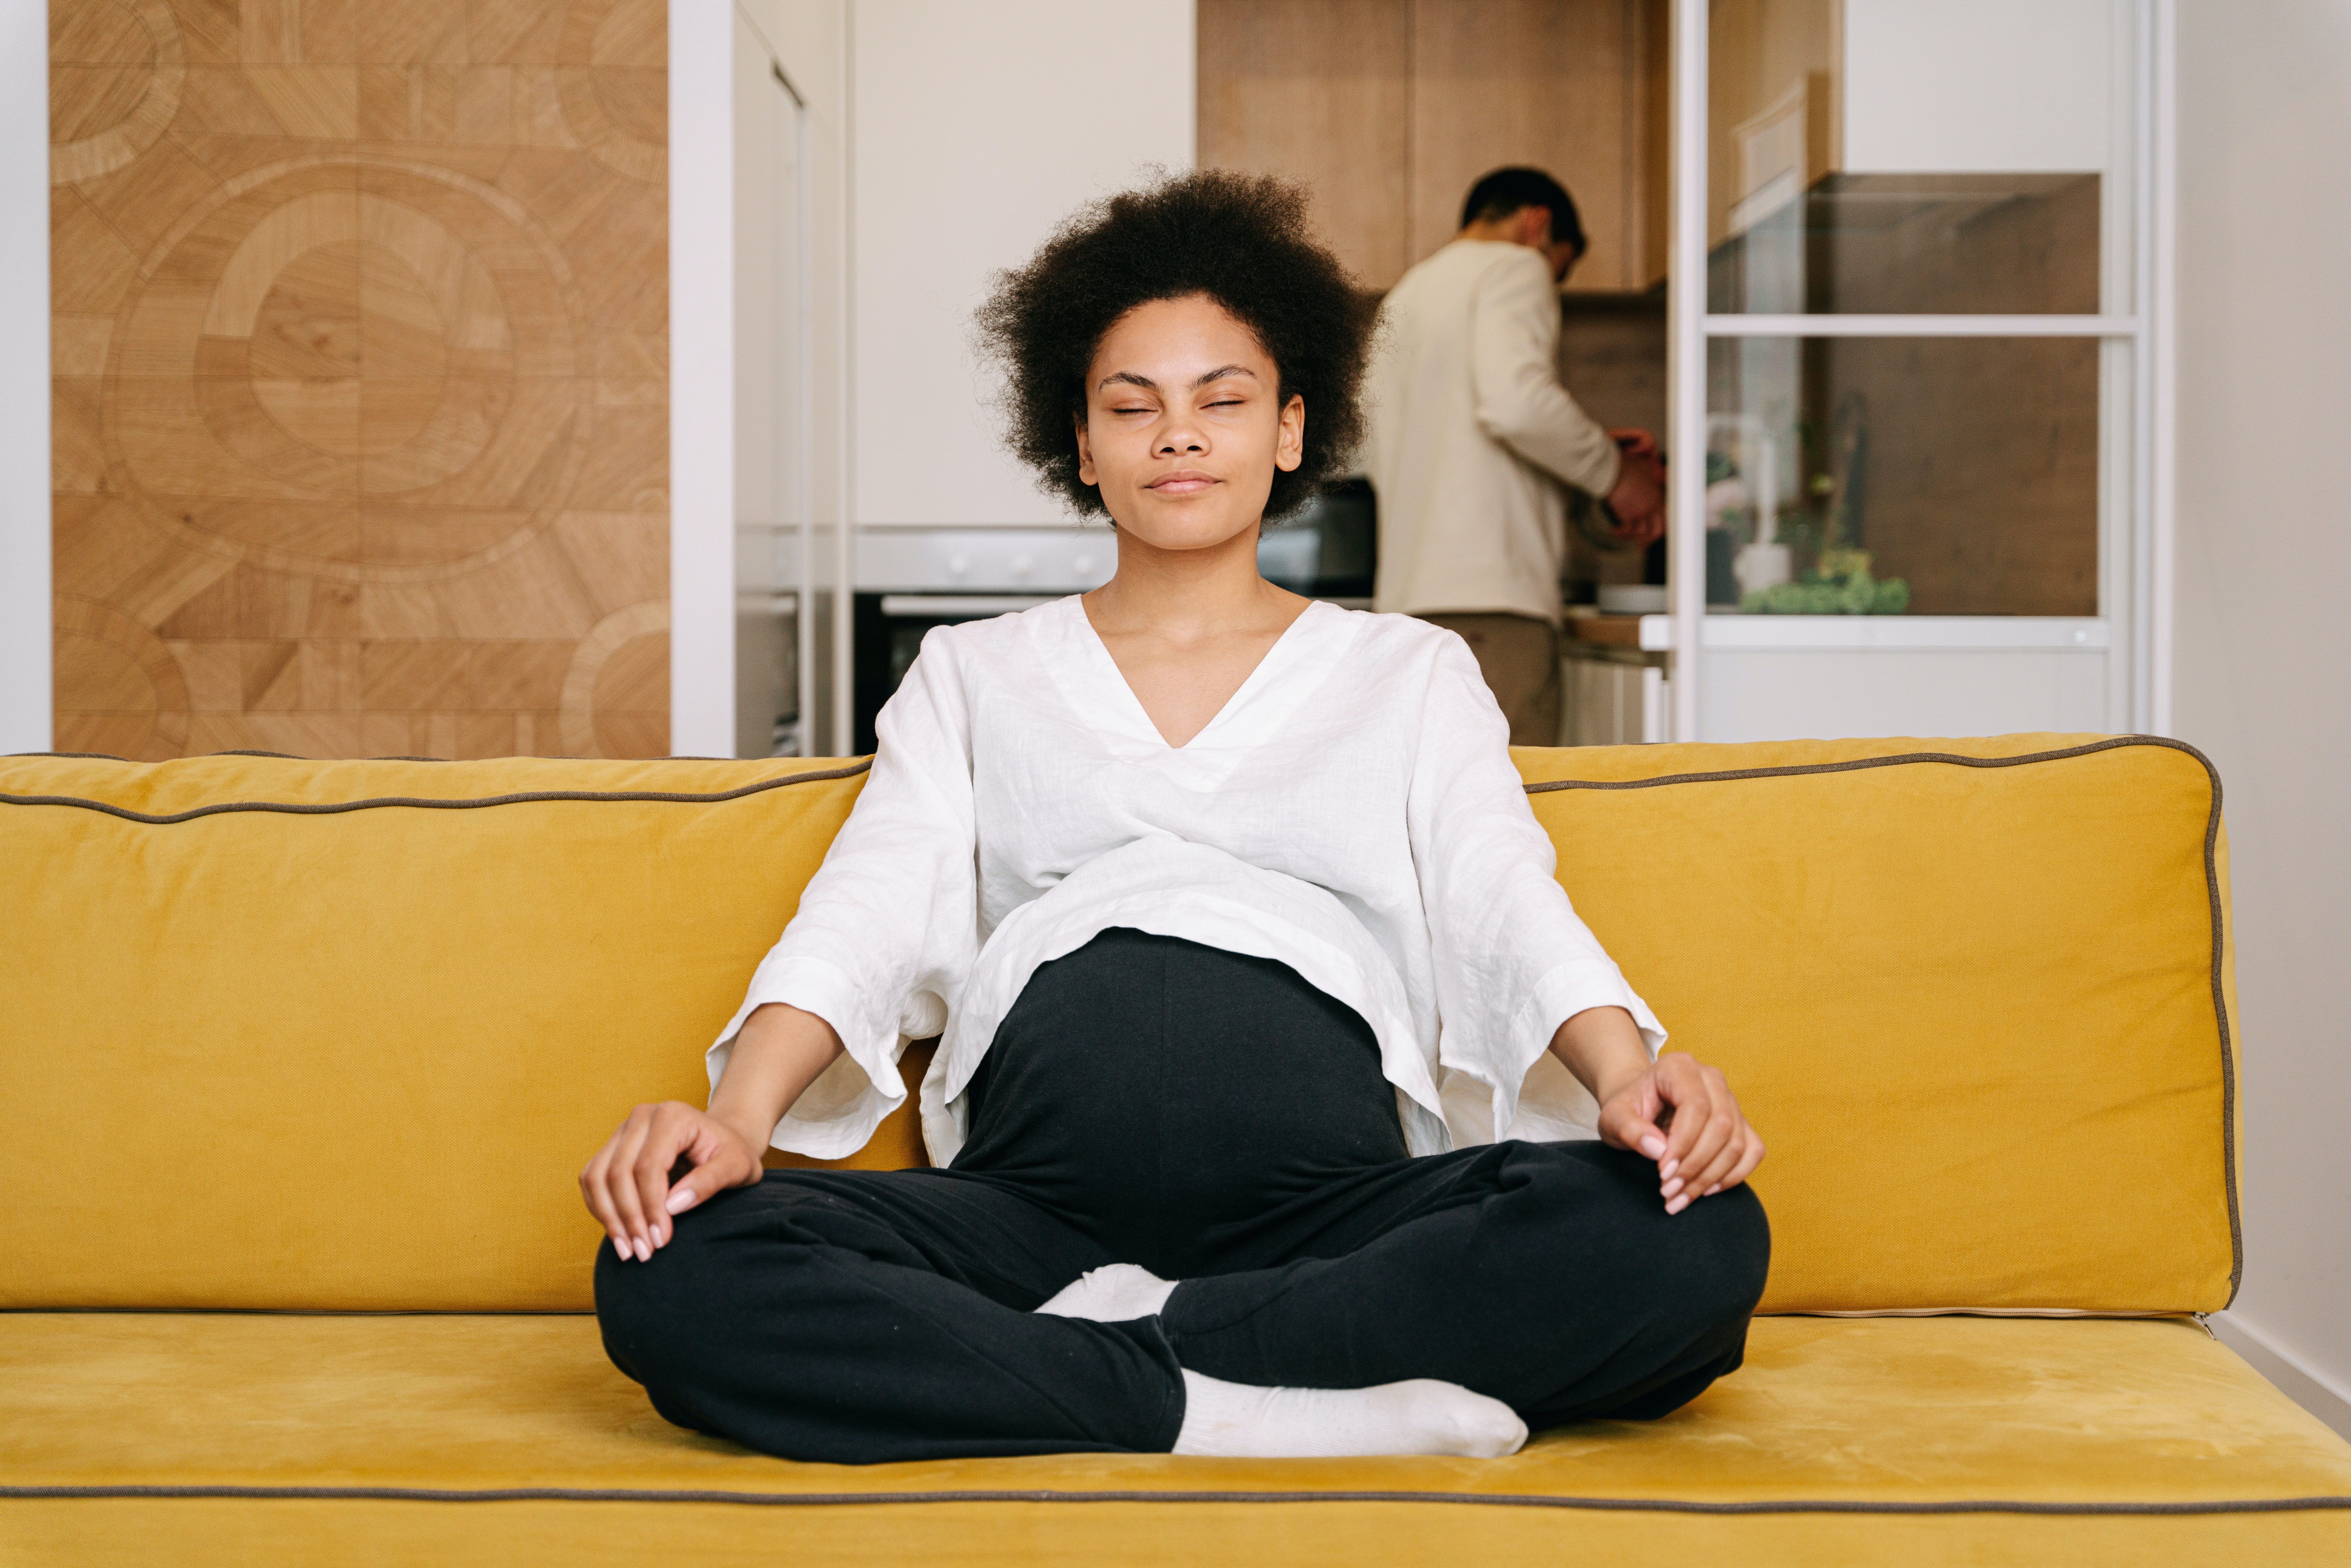 When should I meditate during pregnancy